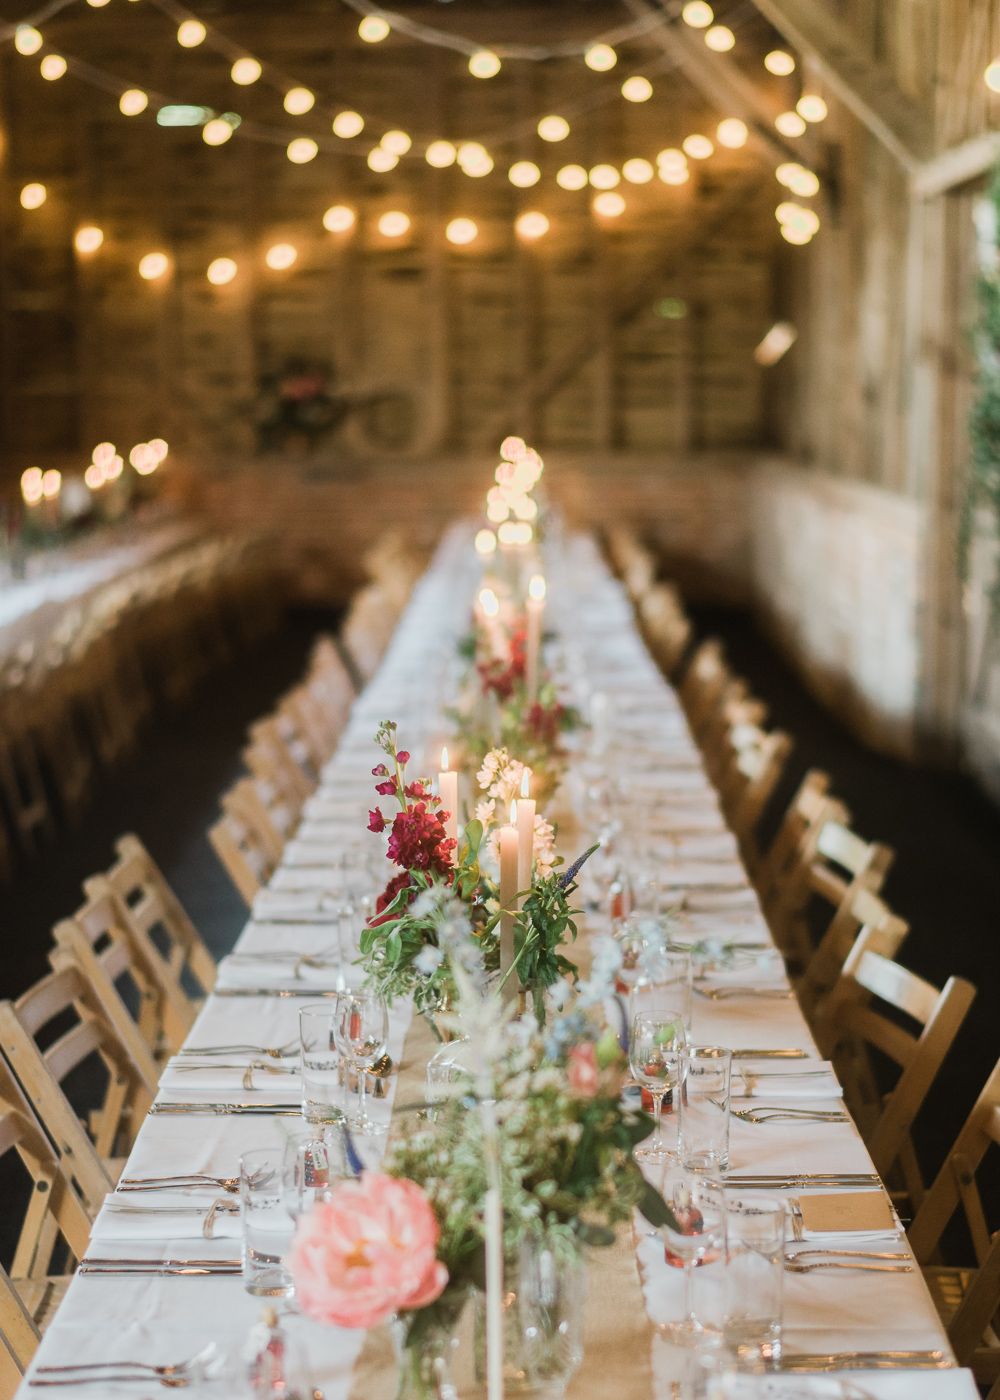 North Hidden Barn For A Rustic Wedding With Festoon Lights